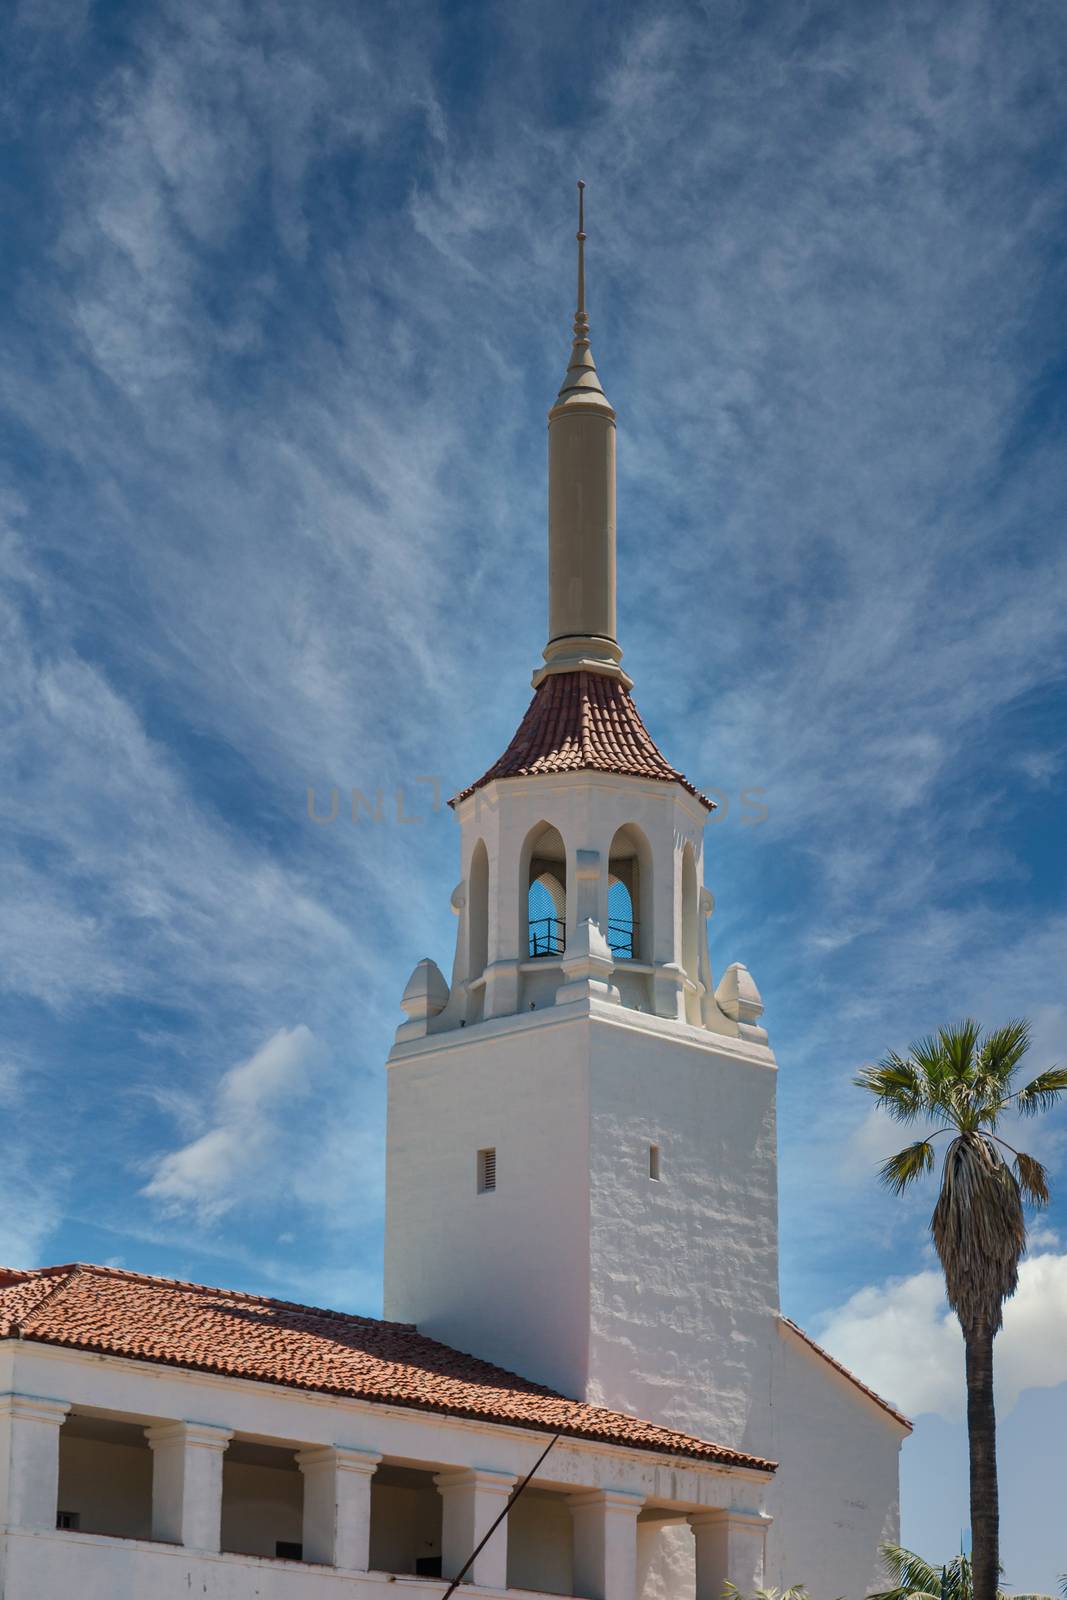 Santa Barbara Church Steeple by dbvirago